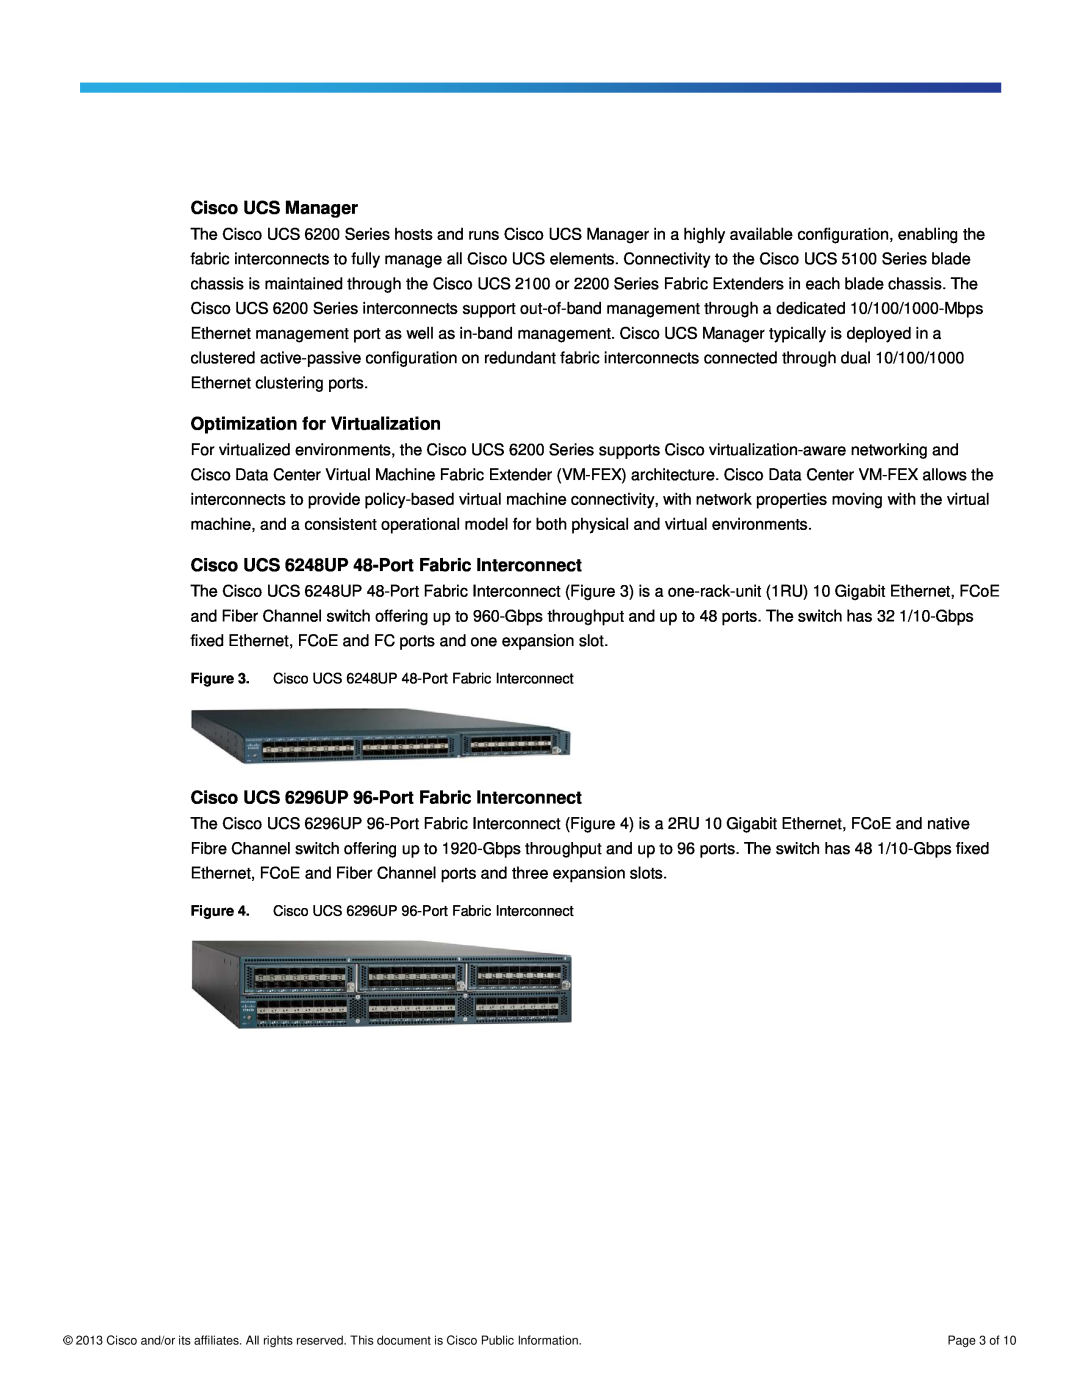 Cisco Systems UCSFI6248E1628P manual Cisco UCS Manager, Optimization for Virtualization 